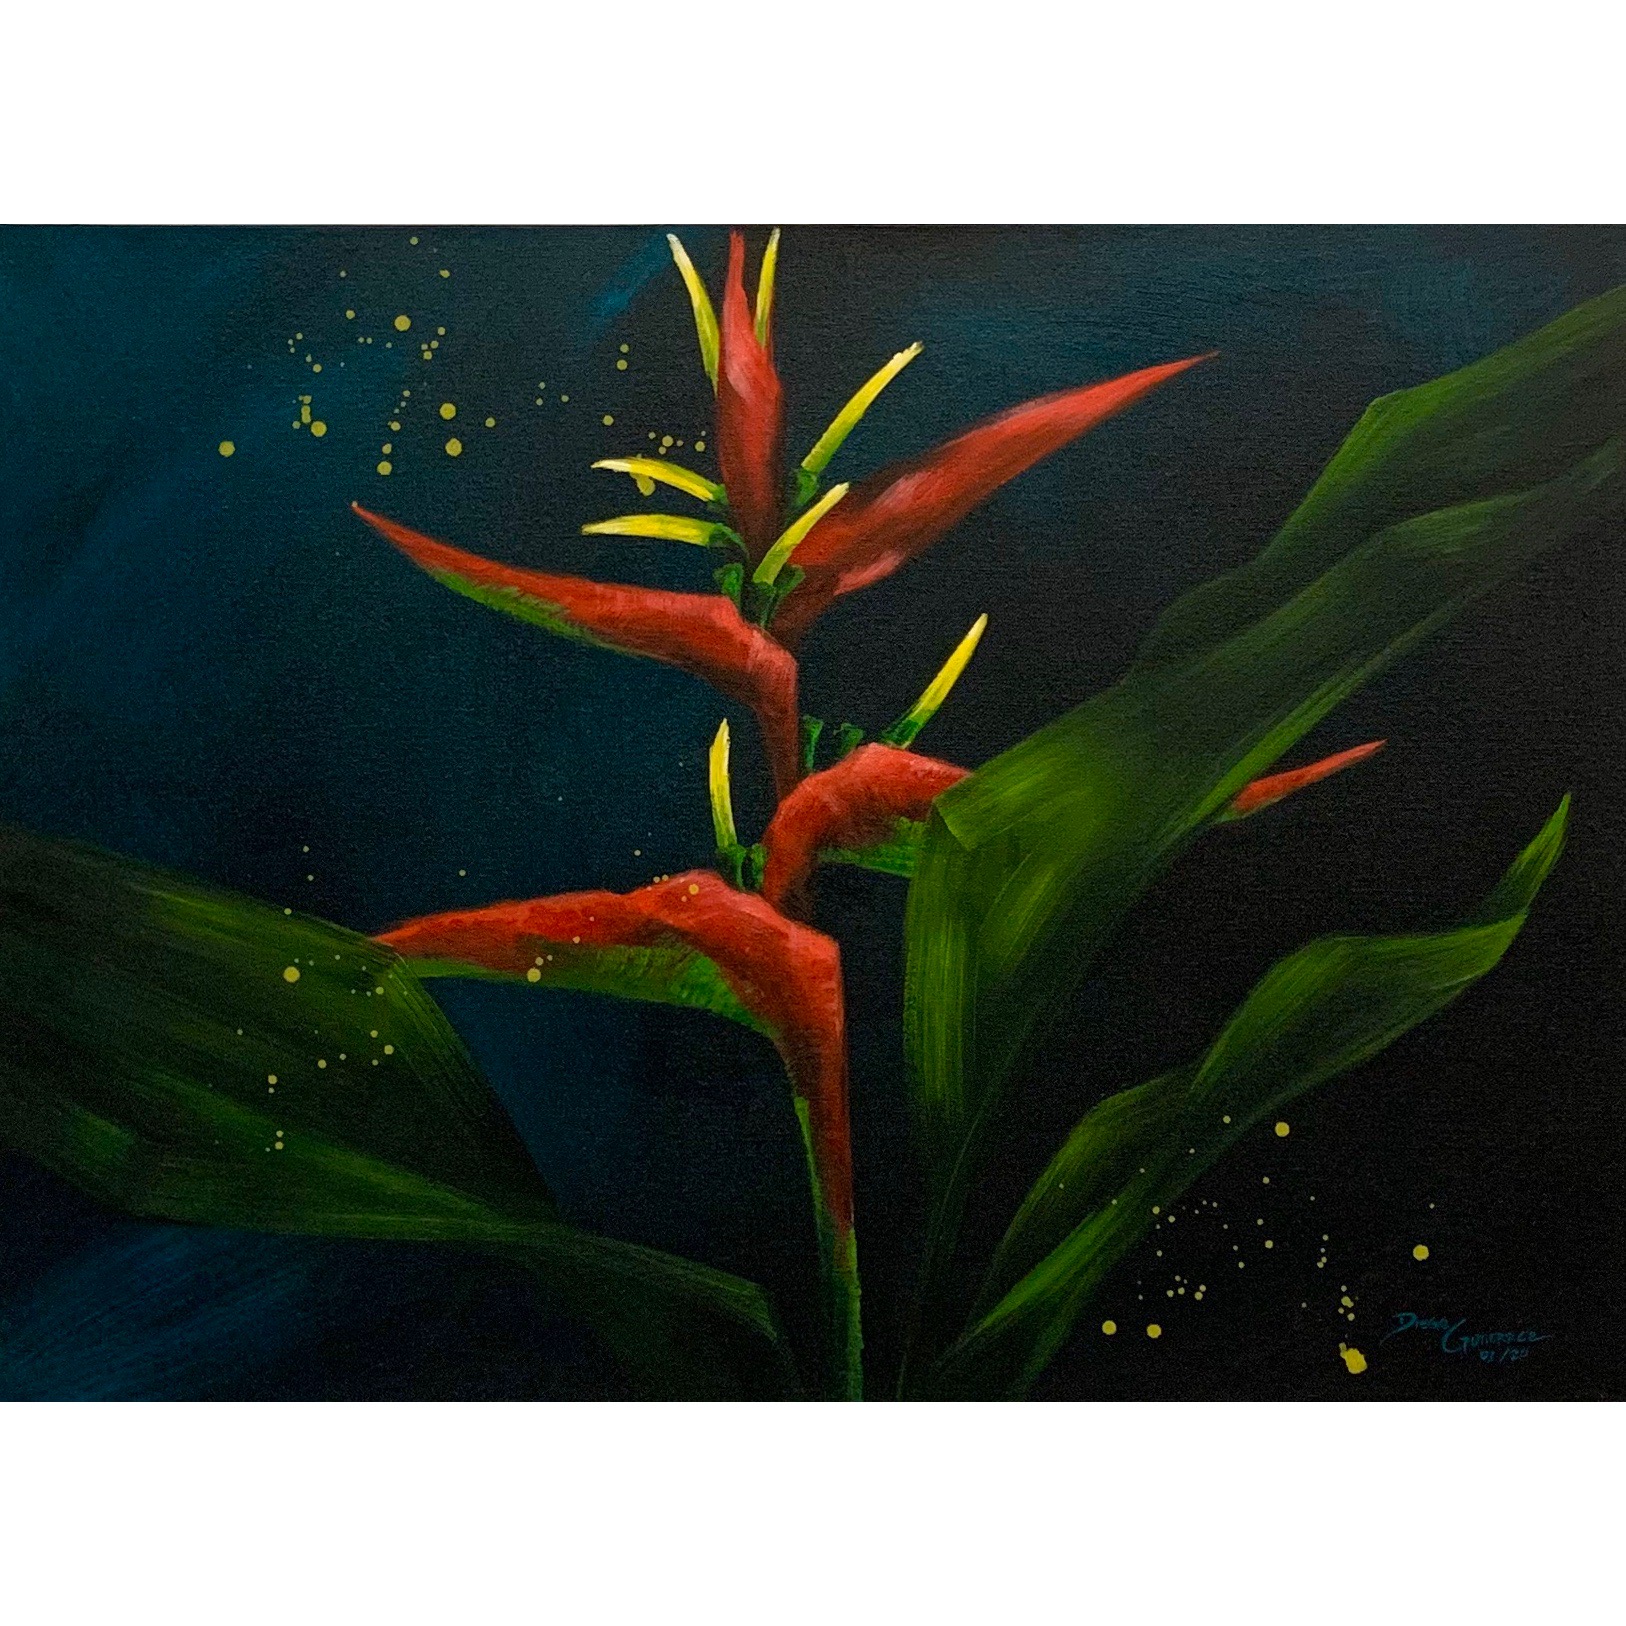 diego-gutierrez-gallery-plants-paradise-flower-02